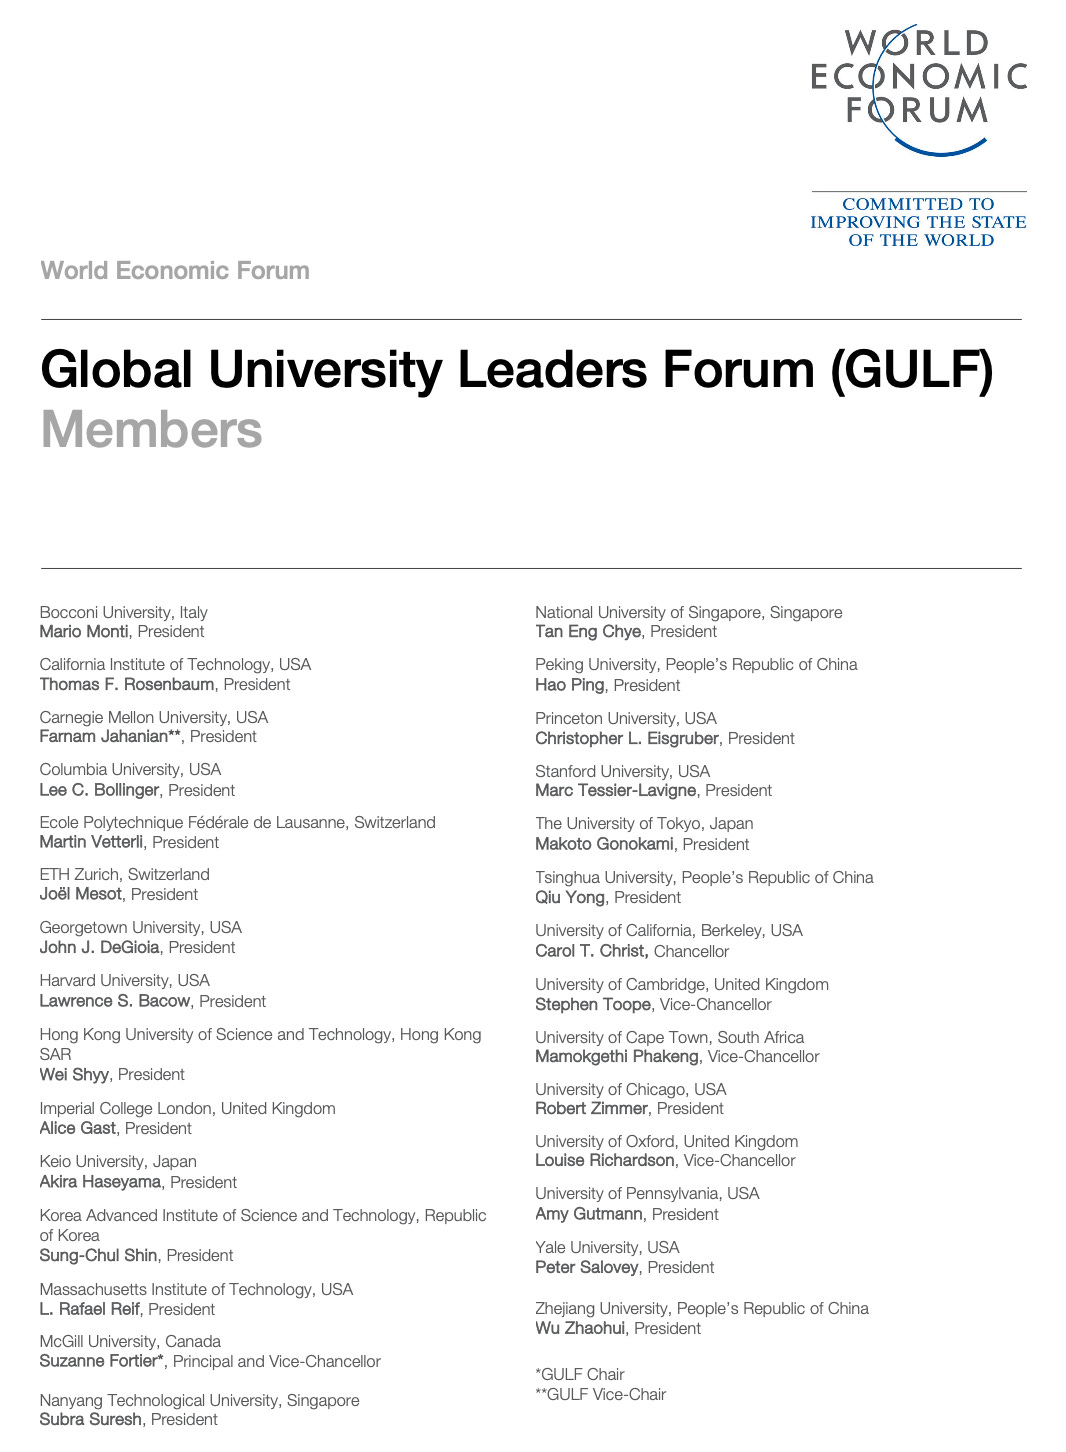 WEF Global University Leaders Forum (GULF)